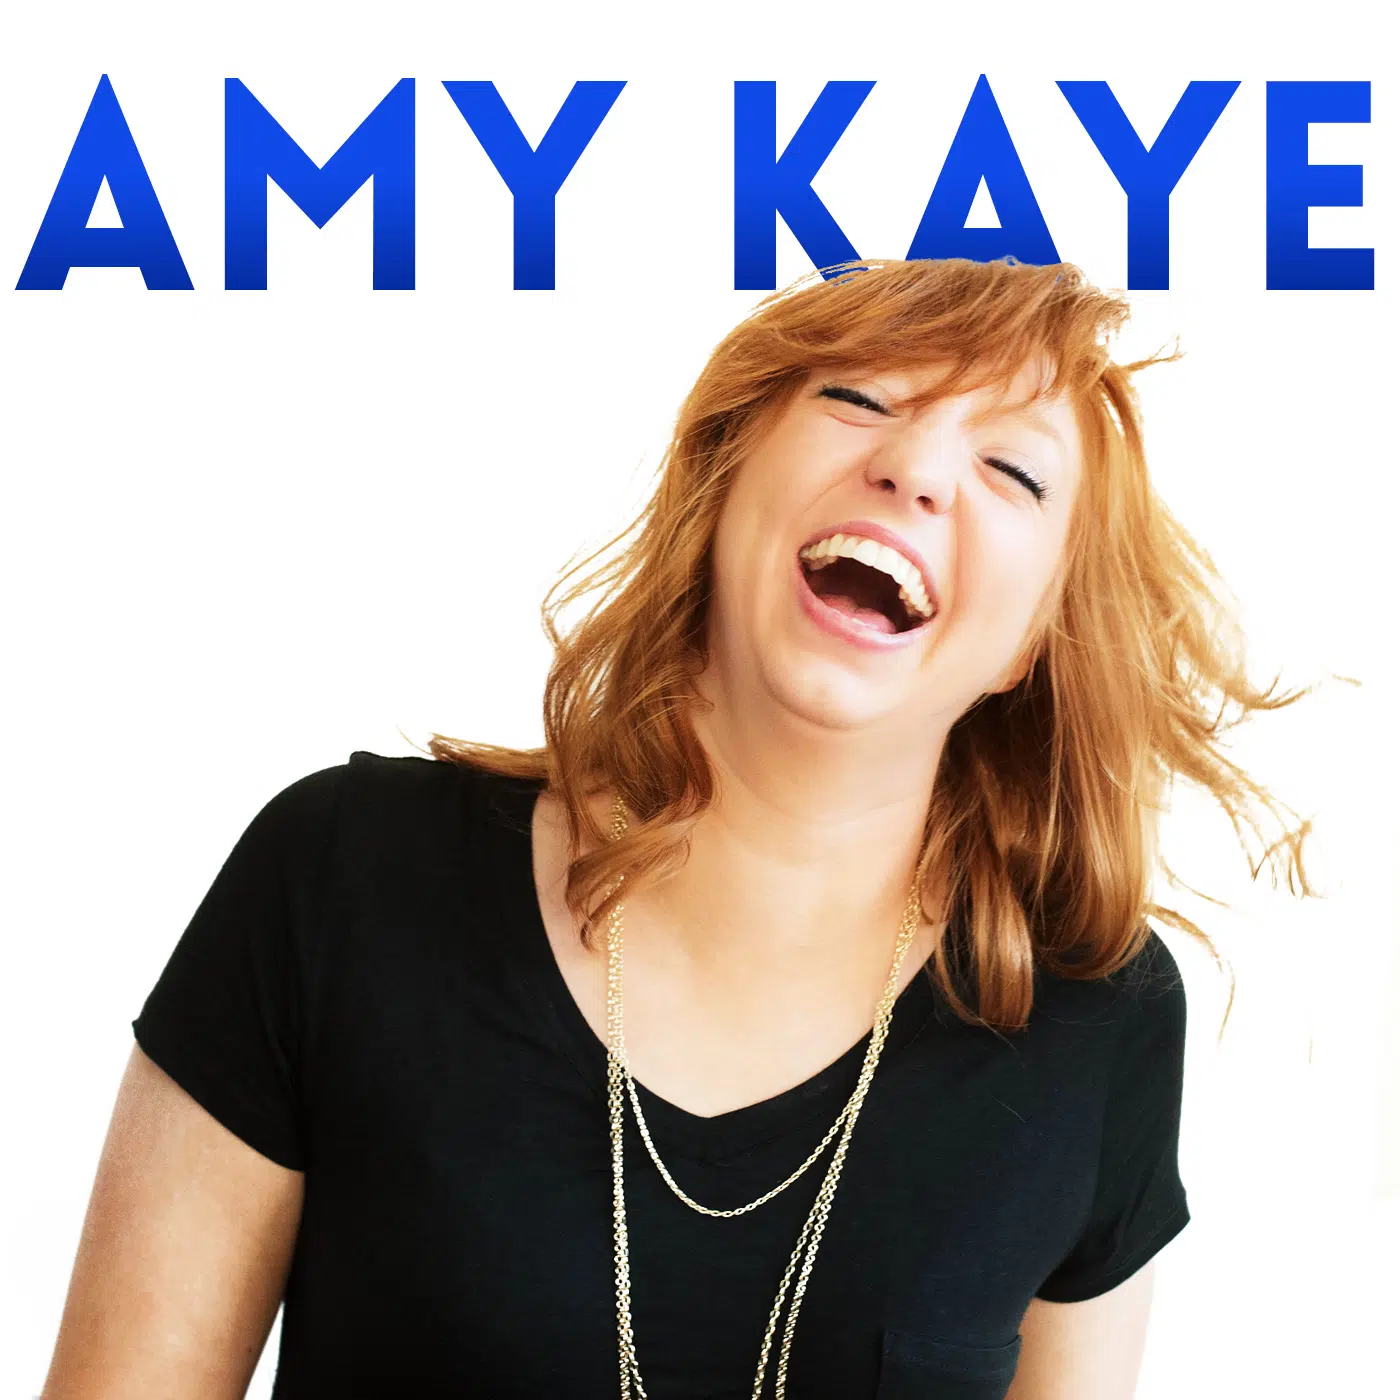 Amy Kaye